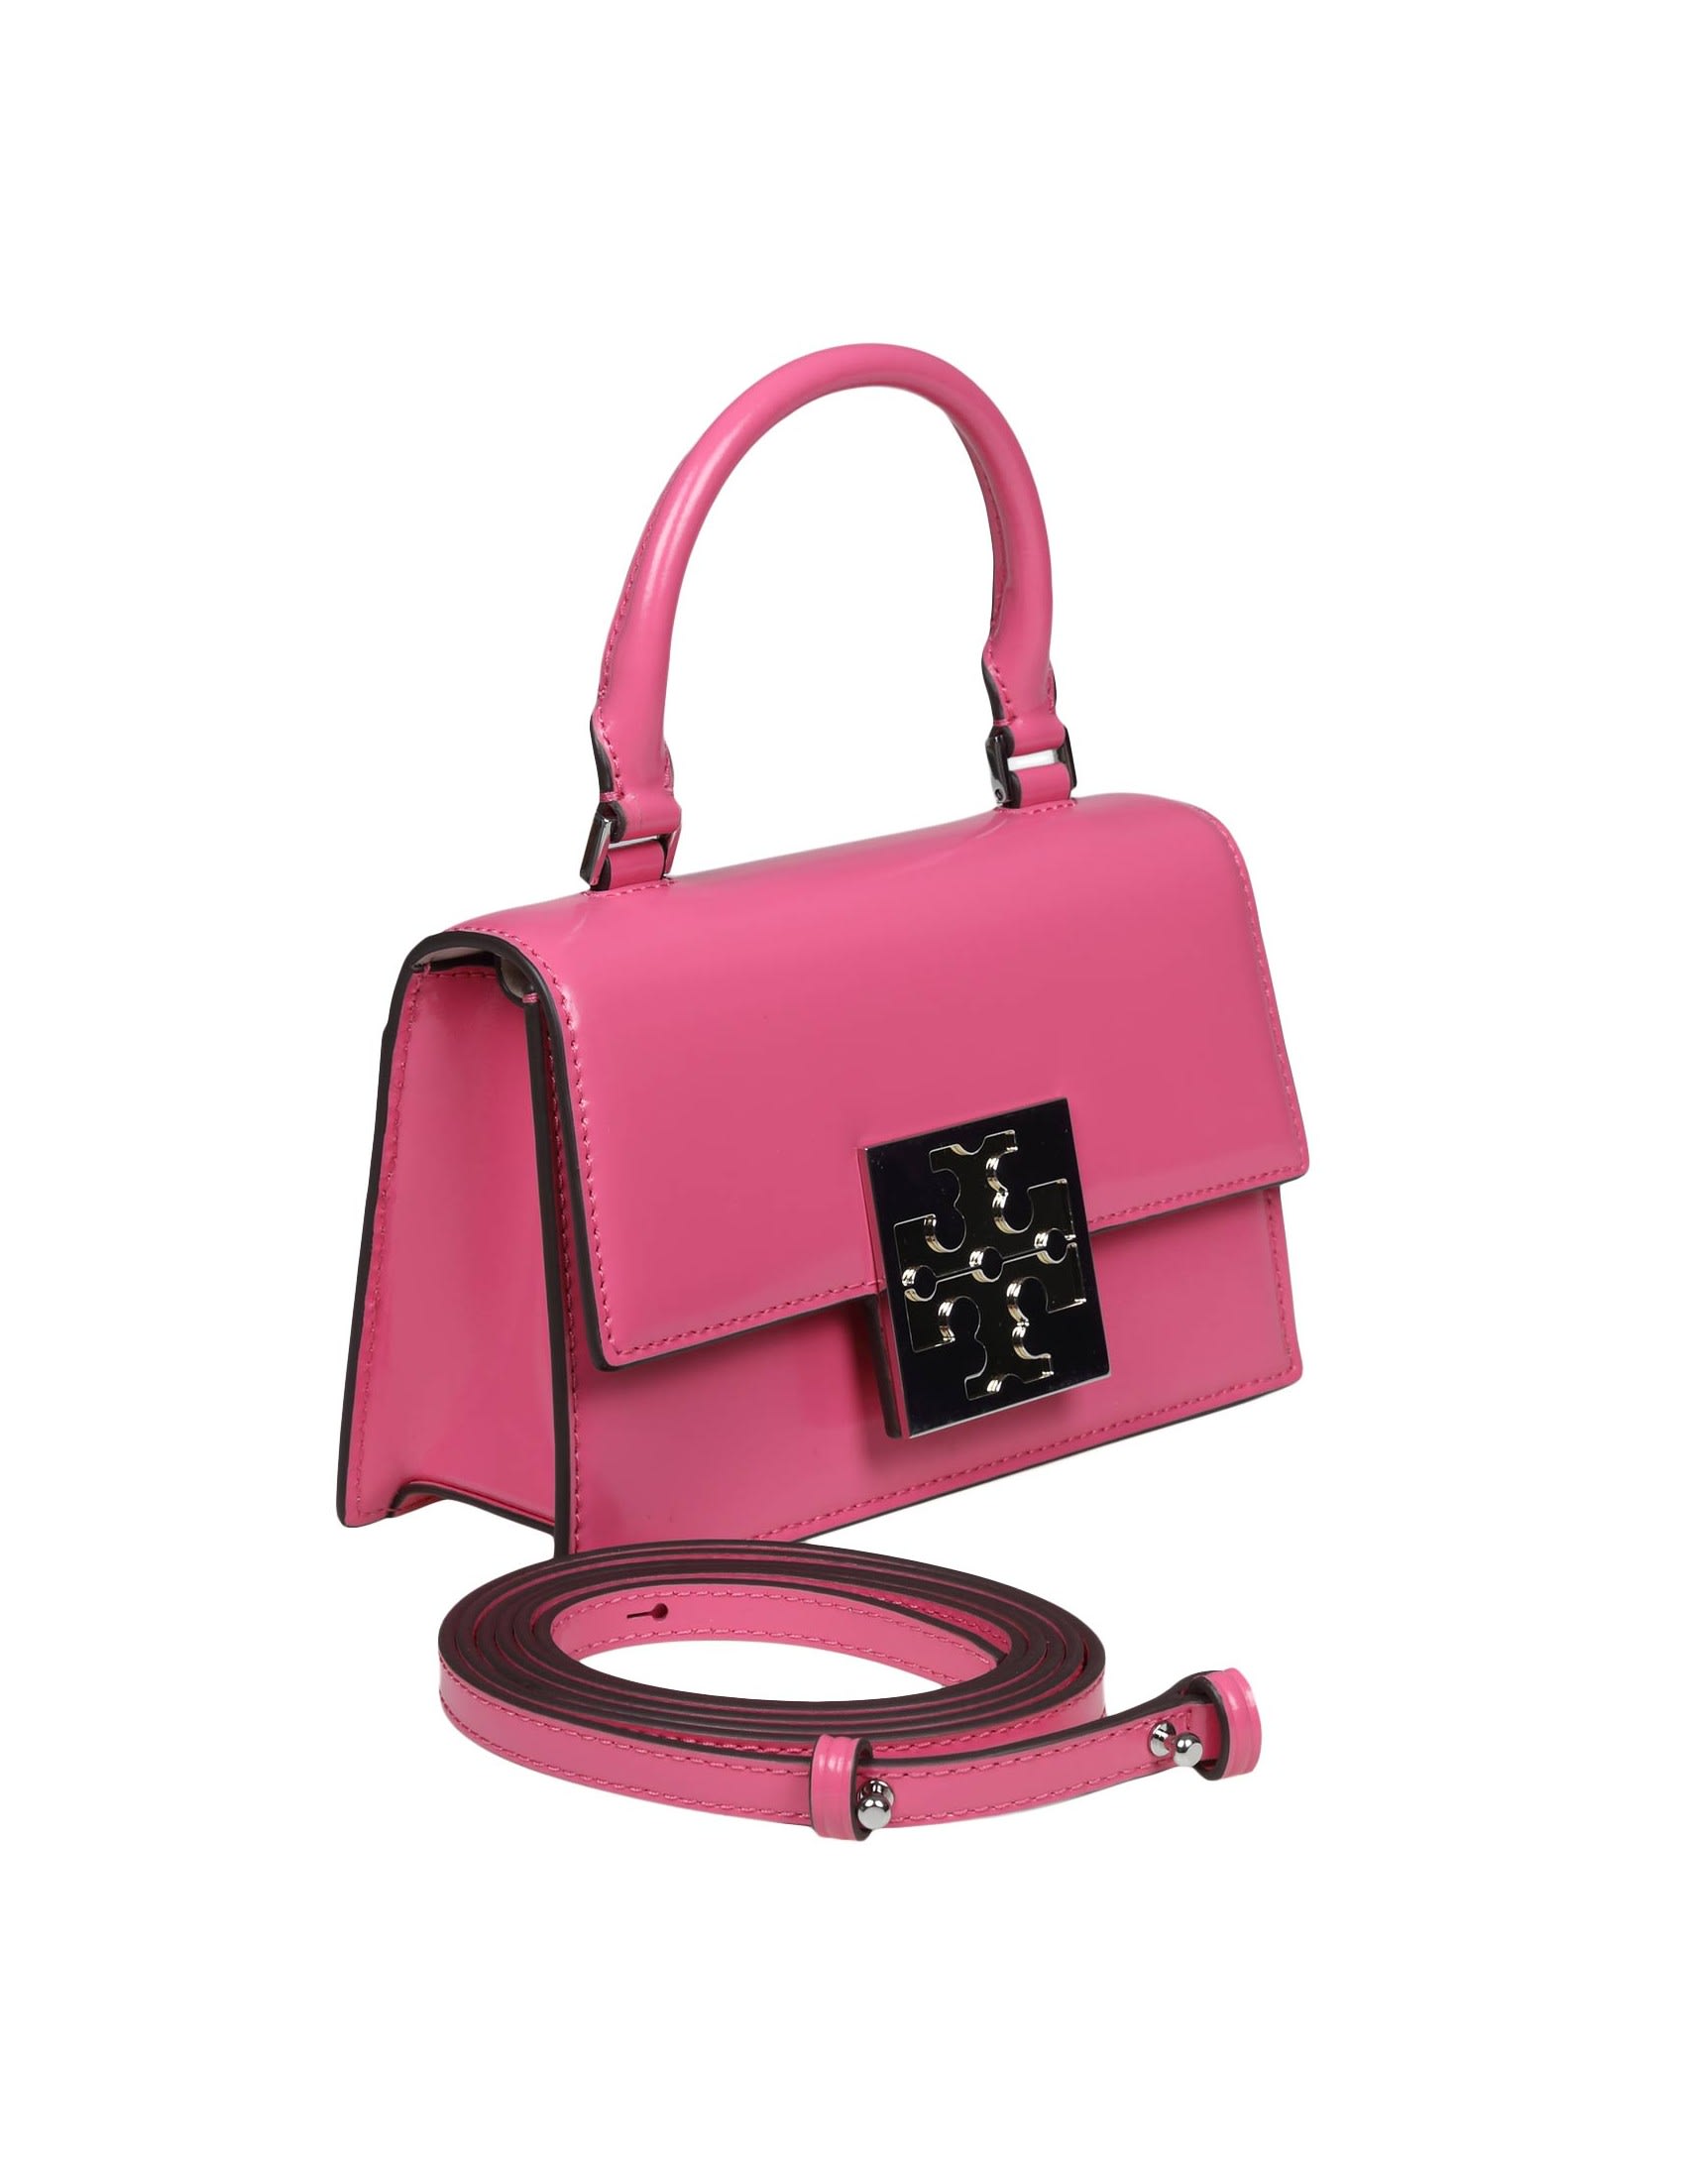 Cross body bags Tory Burch - Trendy mini bag in pink leather - 148865650